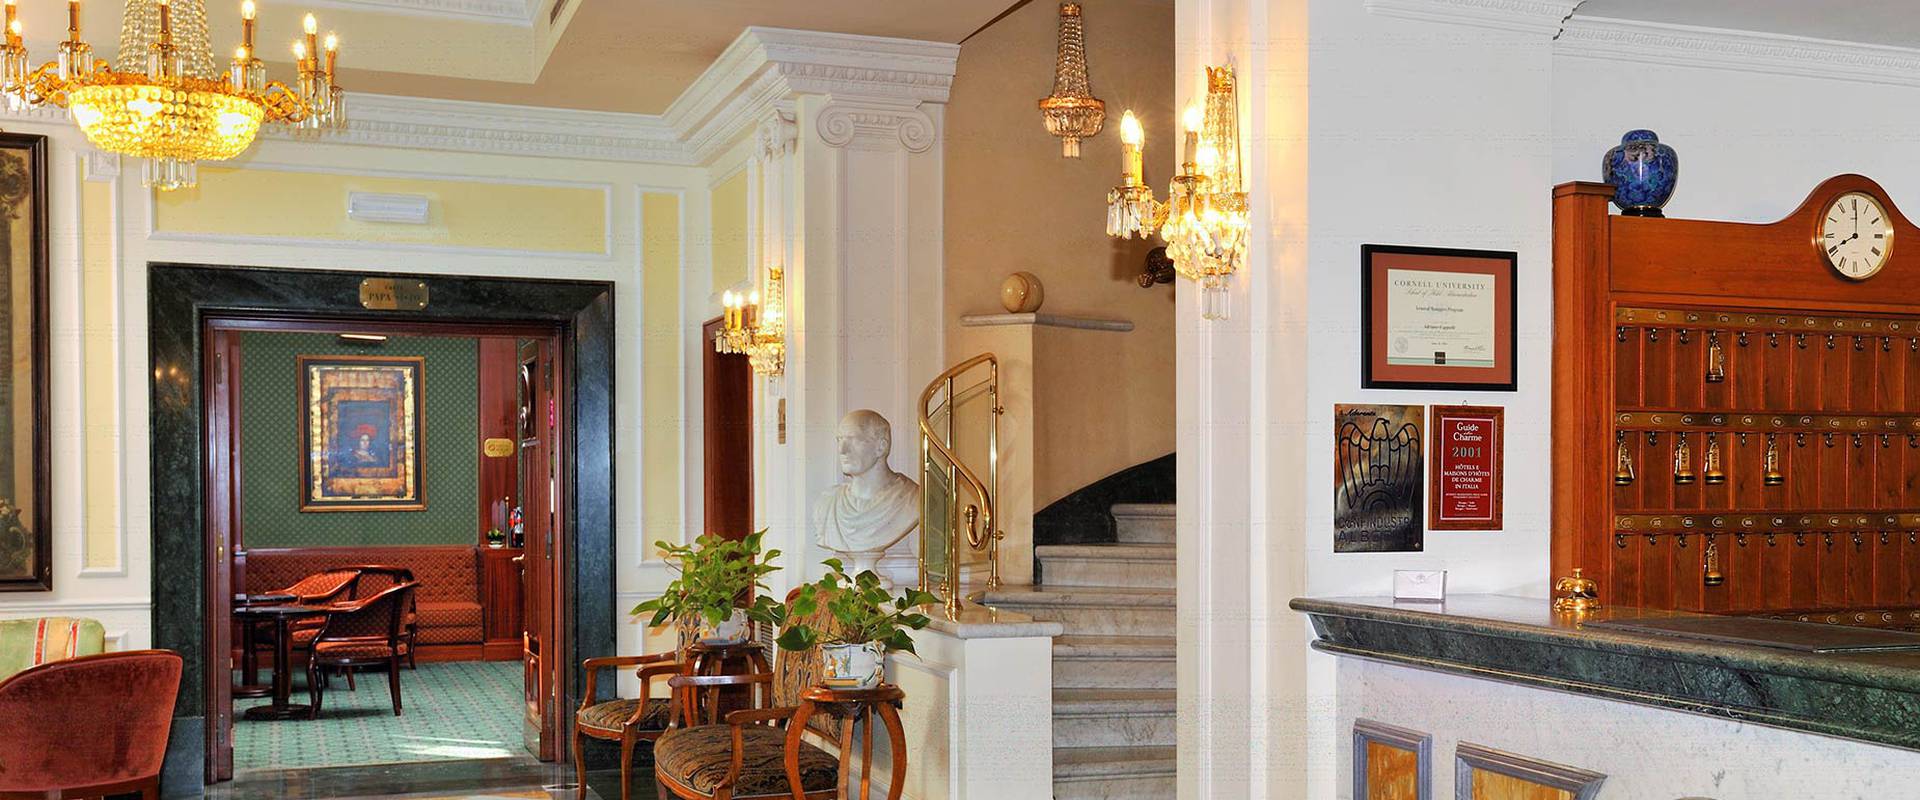 WILLKOMMEN ZU MECENATE PALACE HOTEL Mecenate Palace Hotel Rom